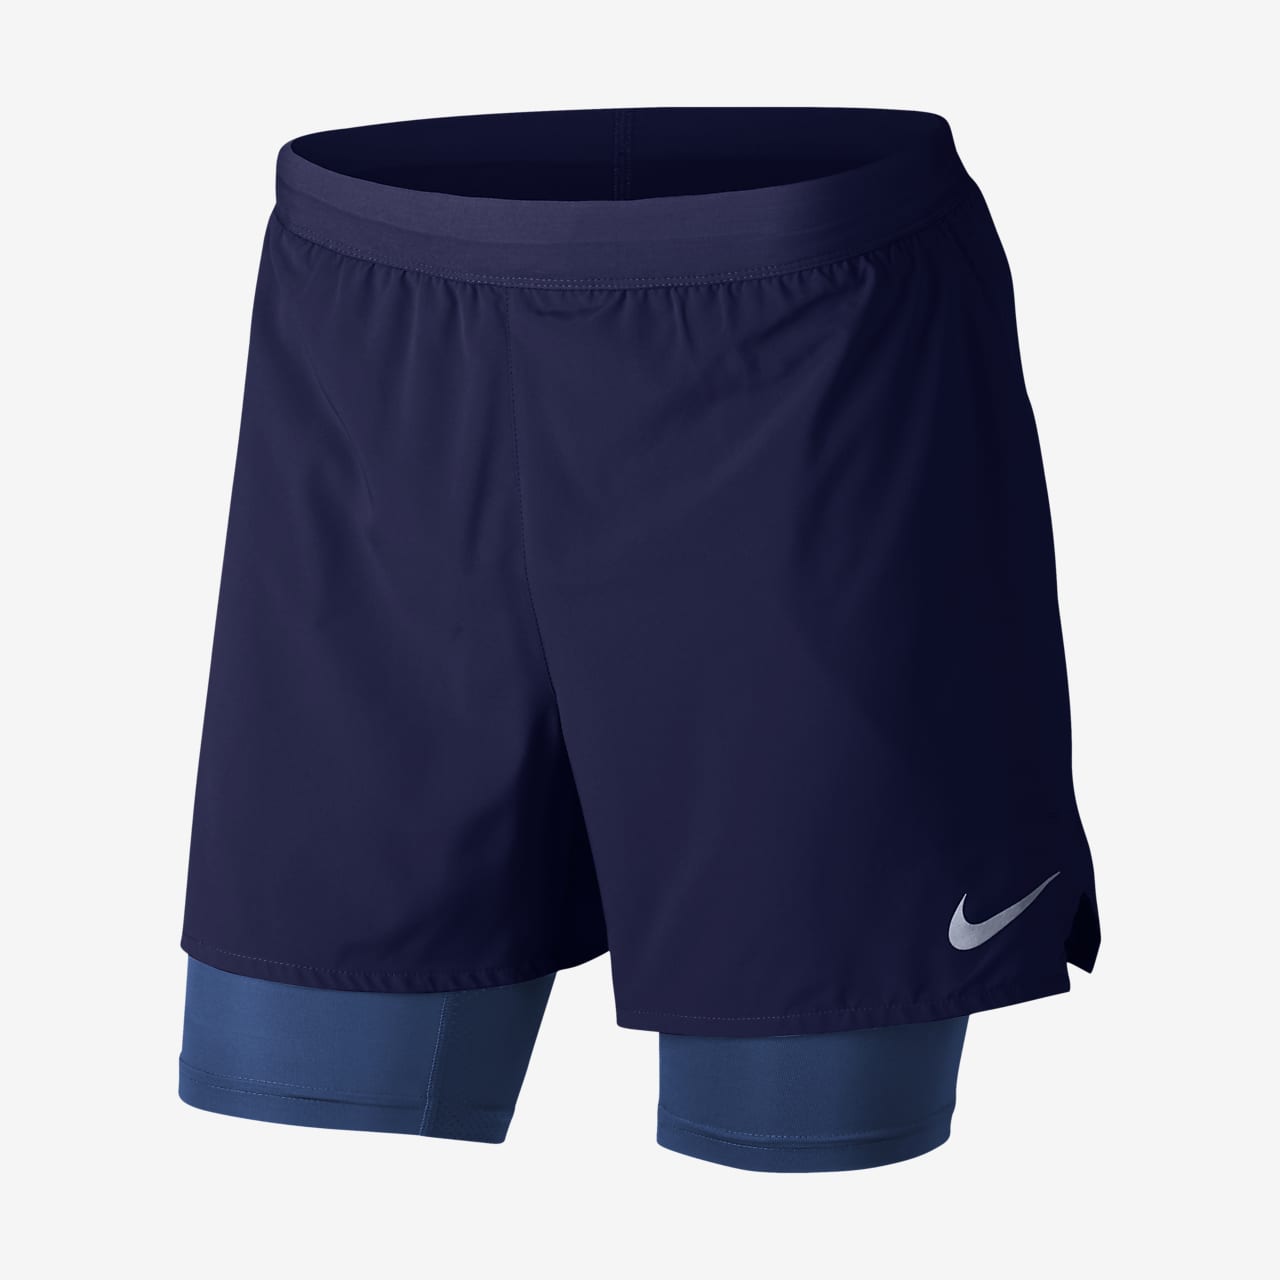 nike men's 5 running shorts